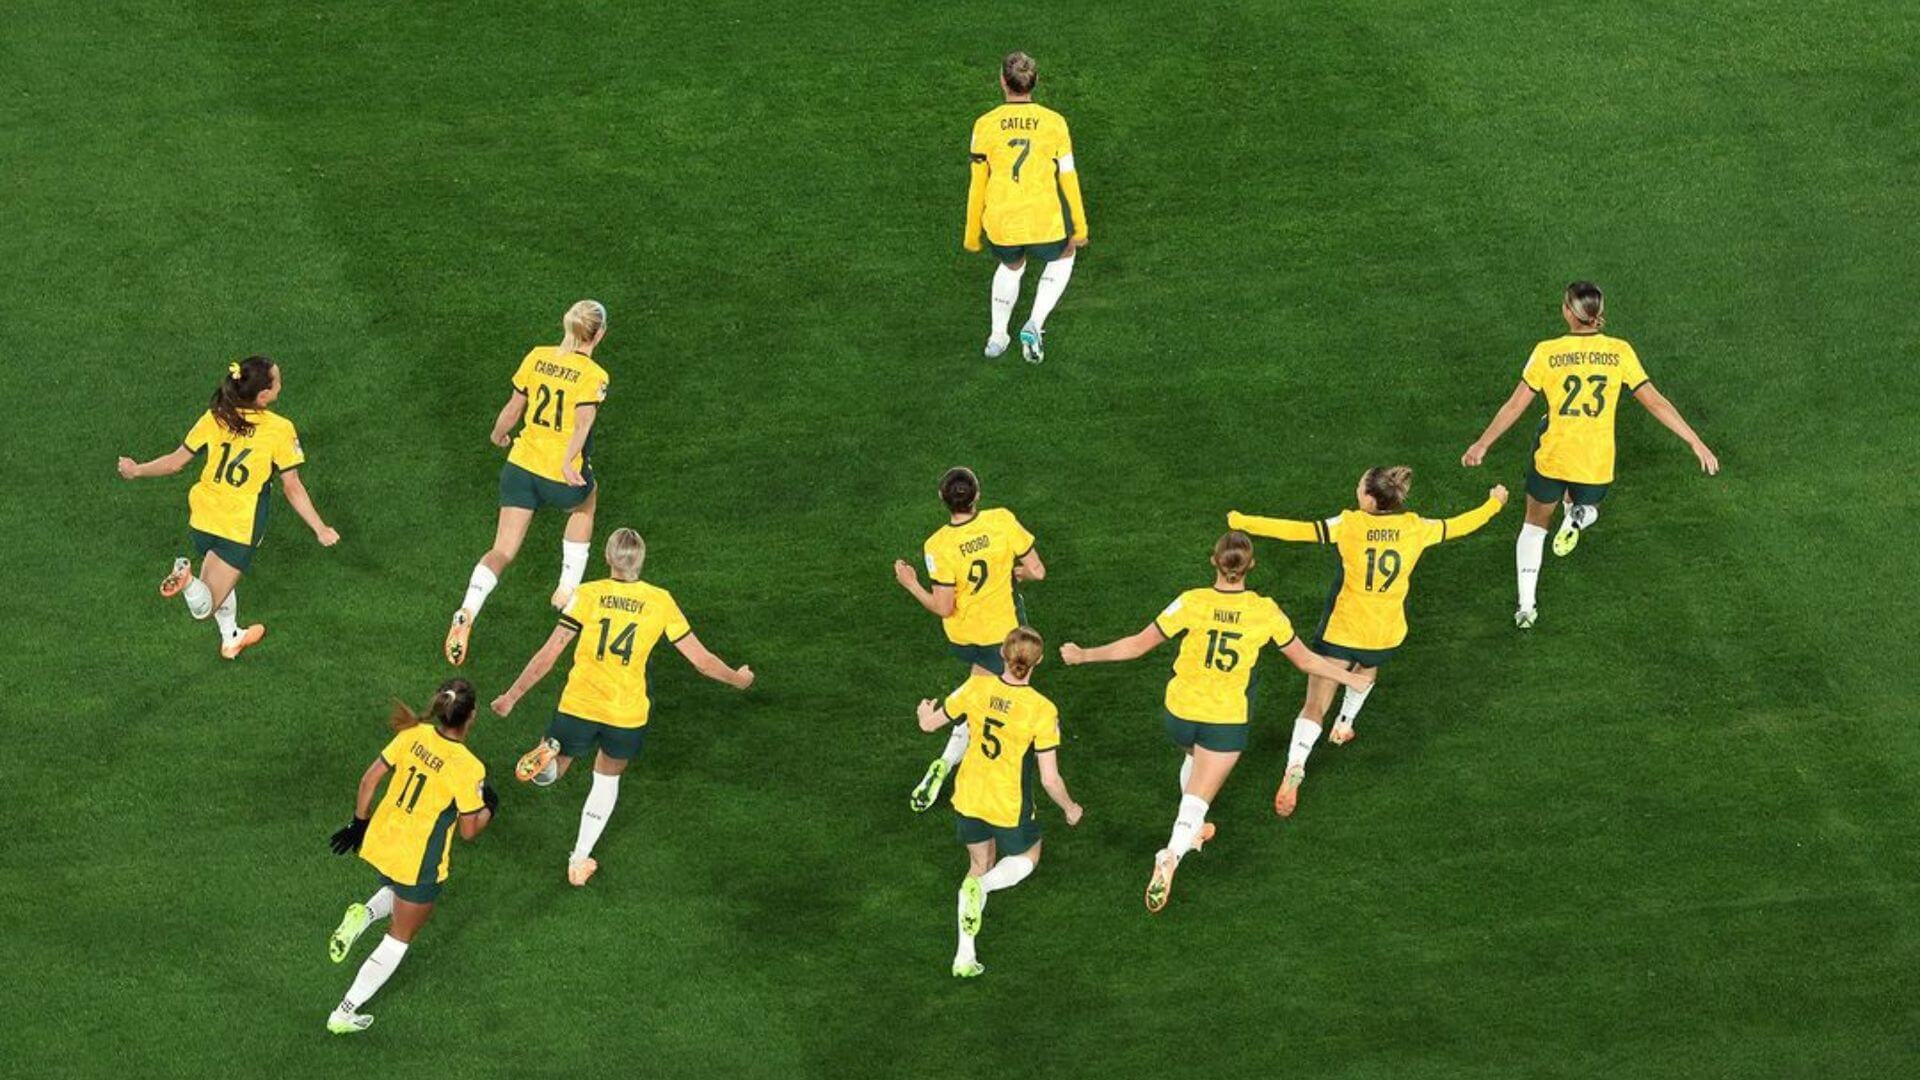 Matildas: The World at Our Feet docuseries follows the Australian women's national team